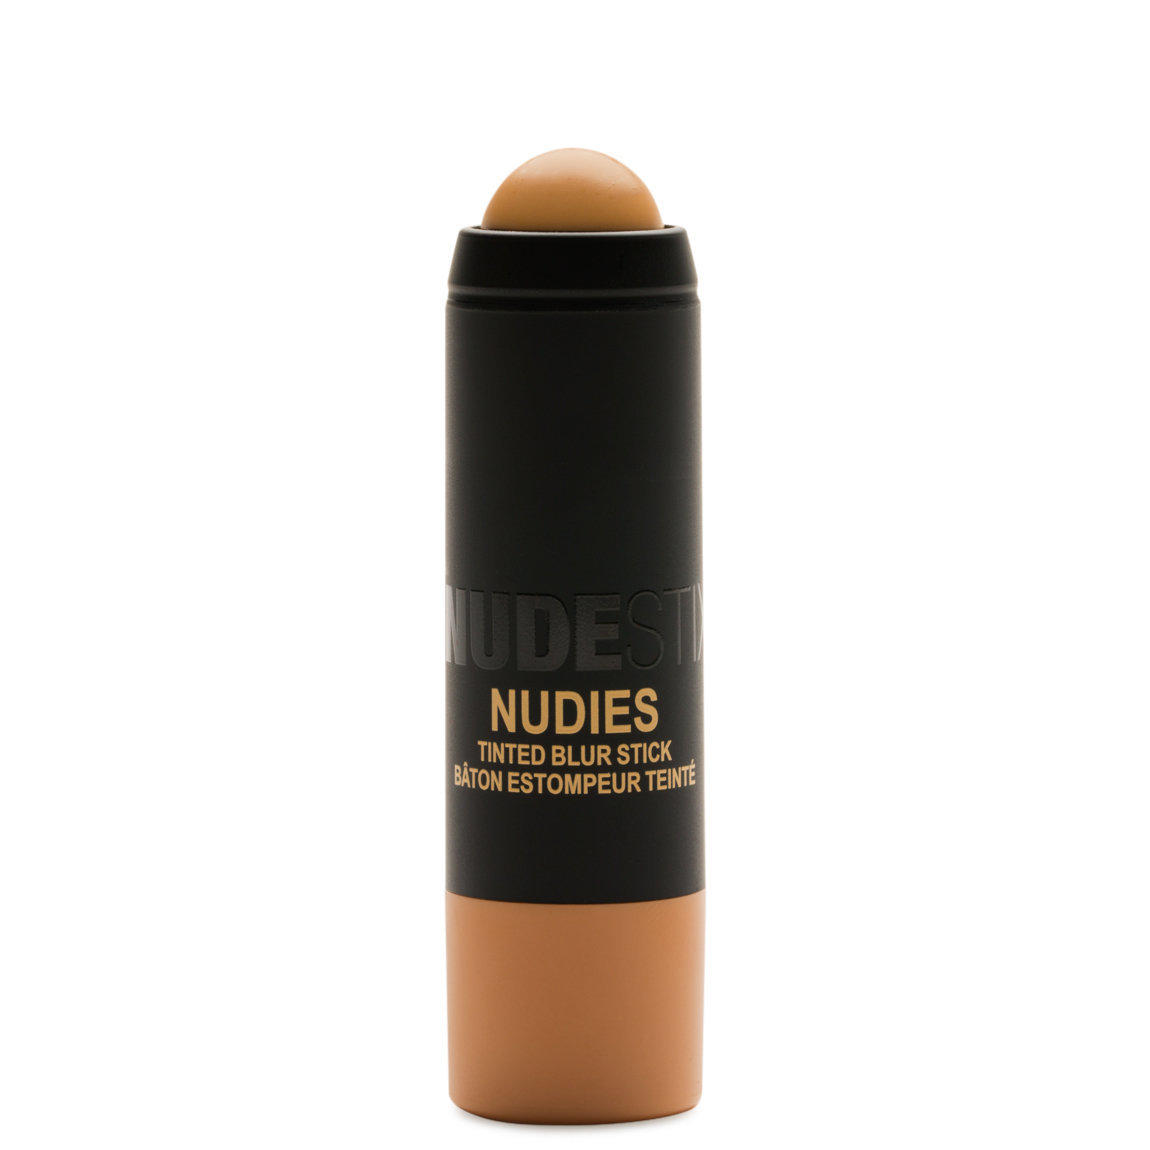 NudeStix Nudies Tinted Blur Stick Medium 4